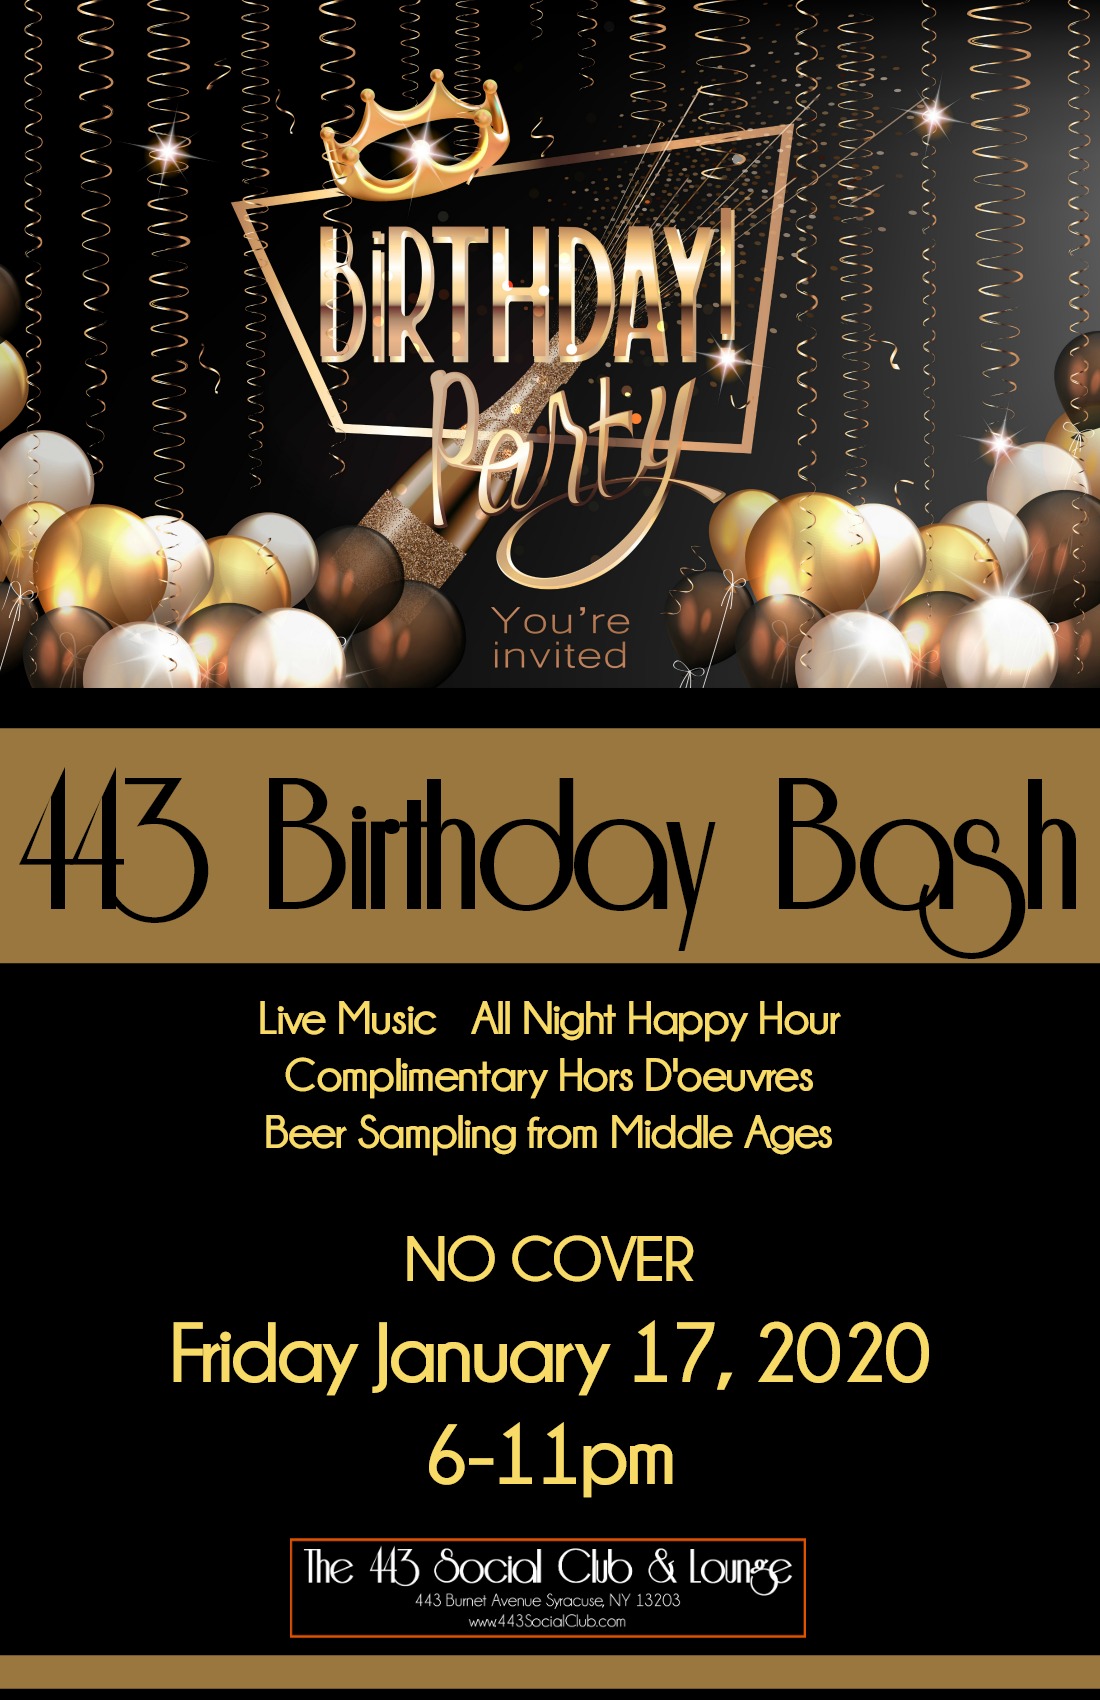 The 443 Birthday Bash - 1/17 - The 443 Social Club & Lounge